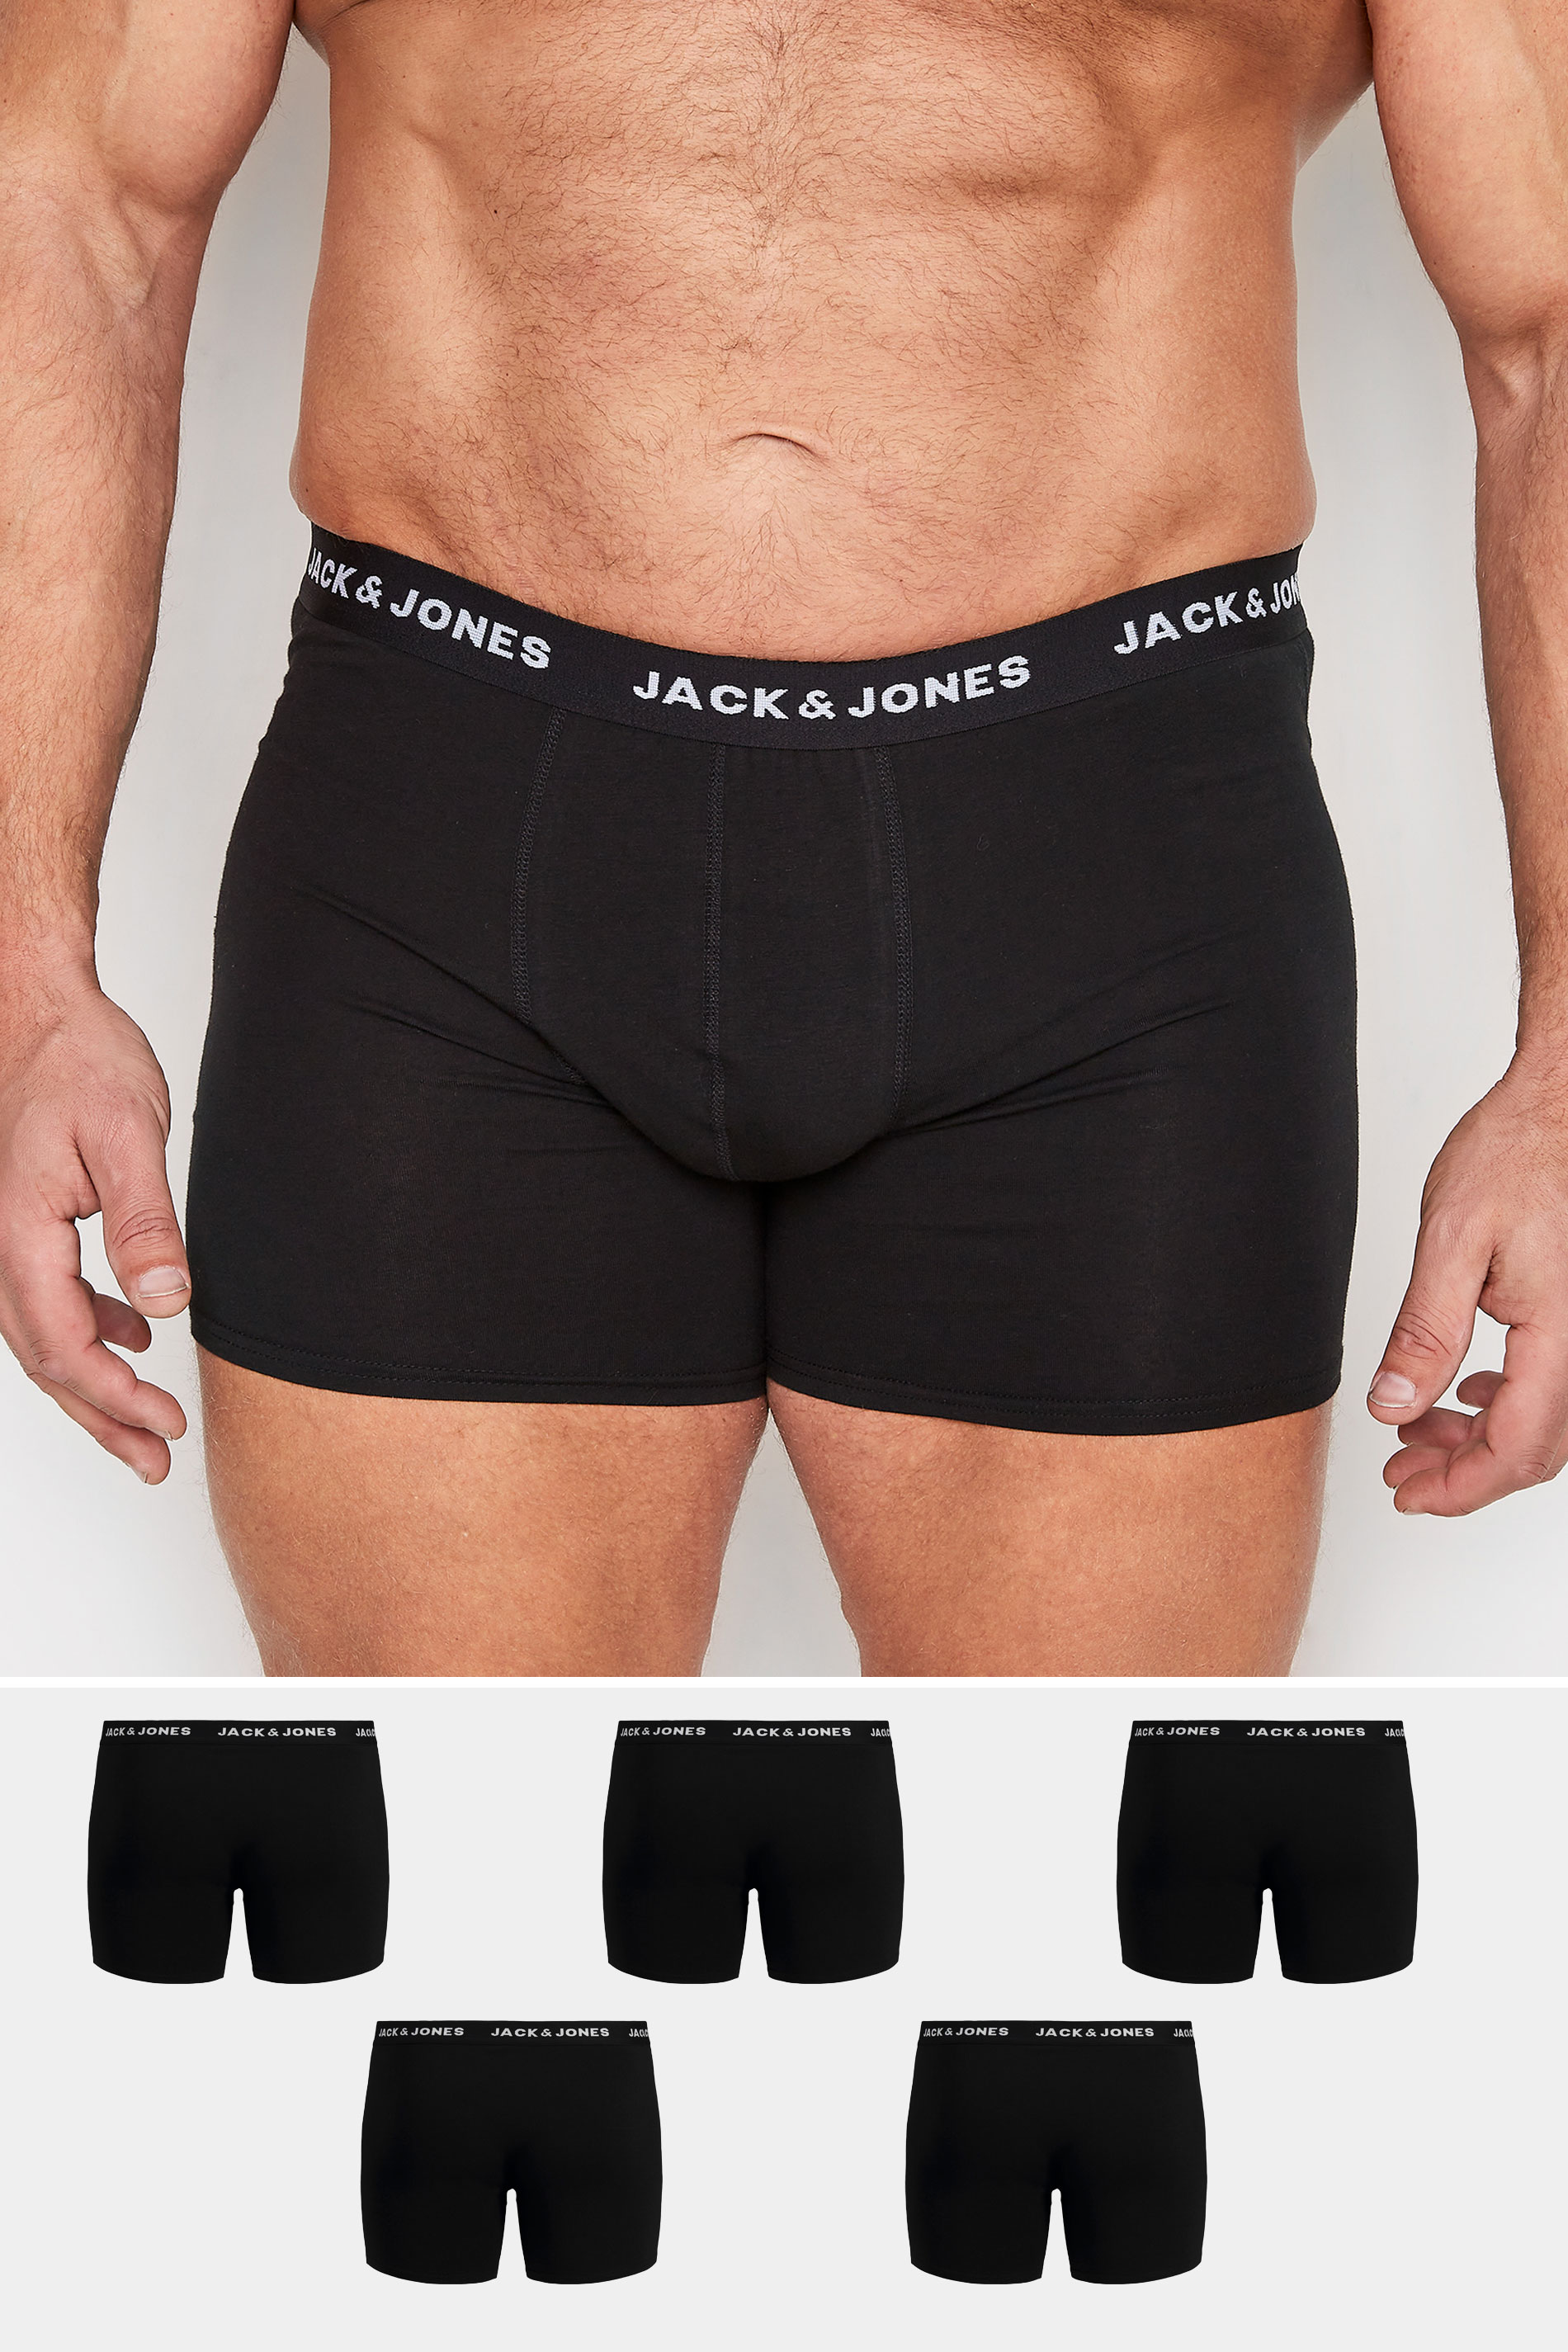 JACK & JONES Big & Tall 5 PACK Black Boxers 1